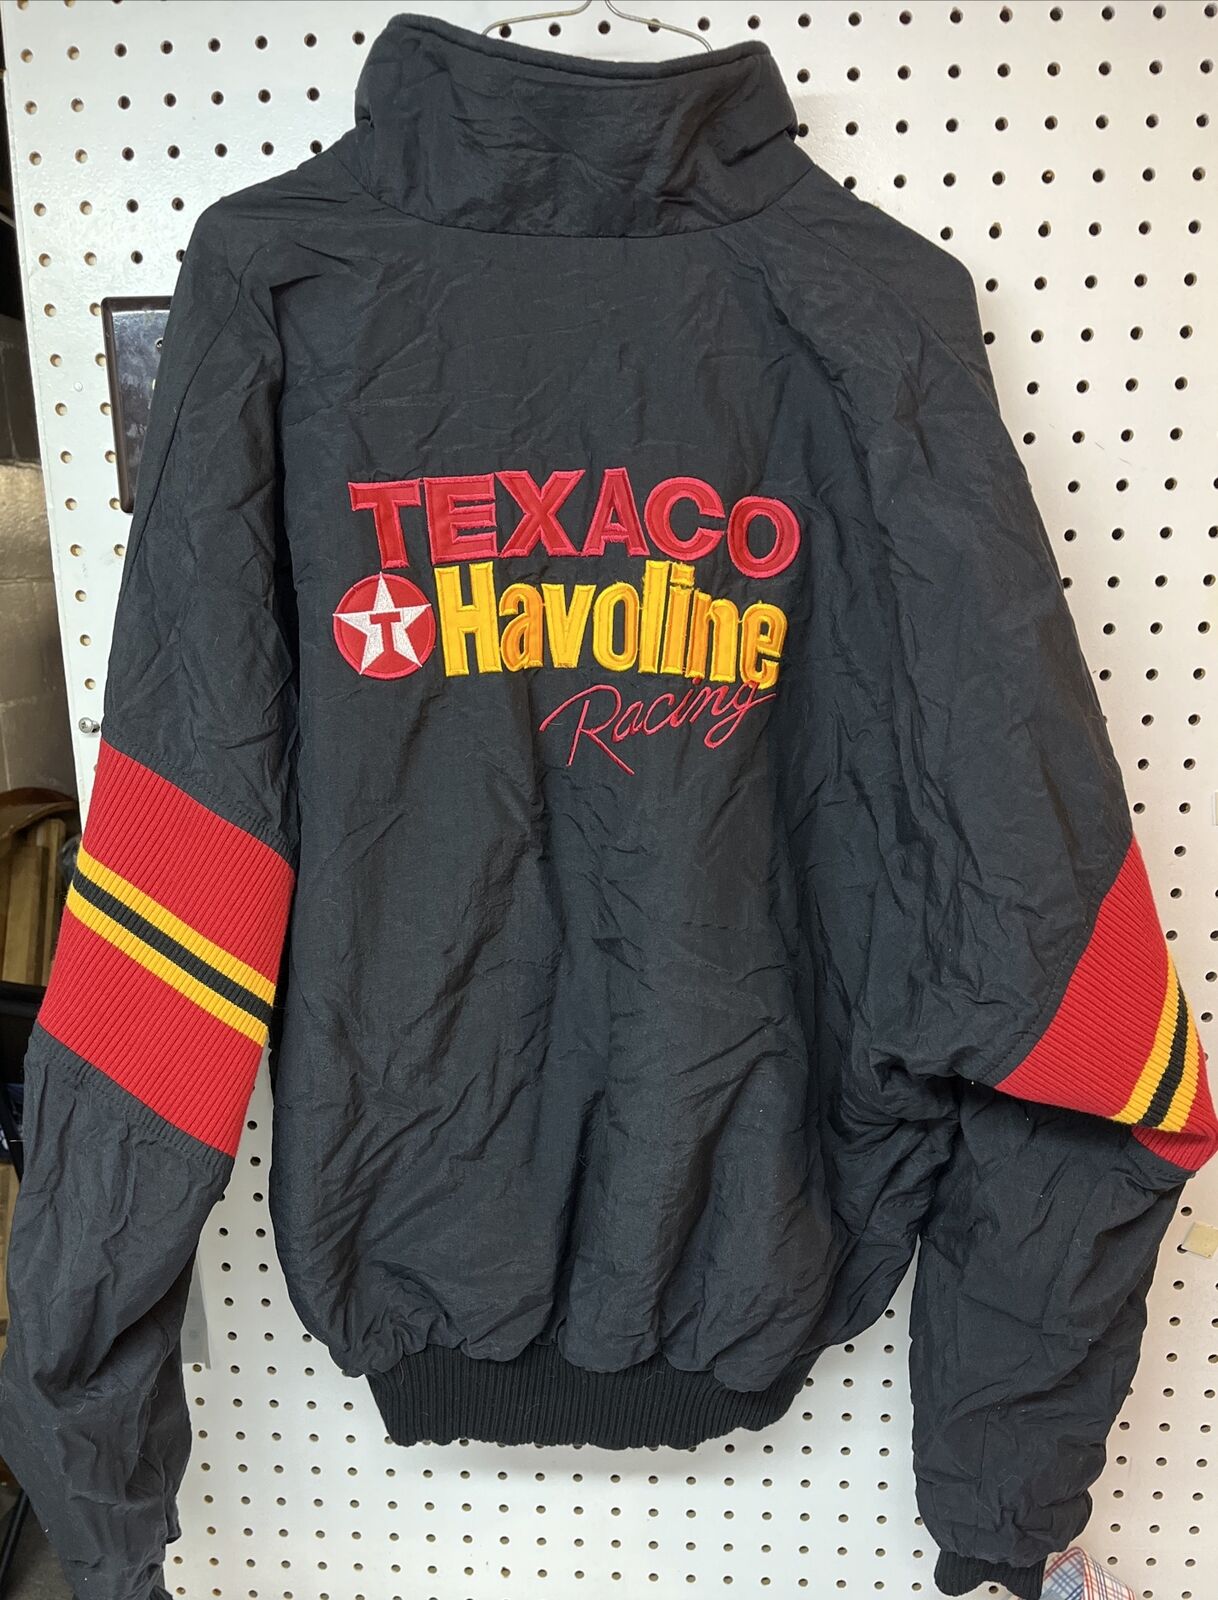 1990s NASCAR VTG Jacket #28 Texaco Havoline Racing Men’s Large Lined Ernie Irvan